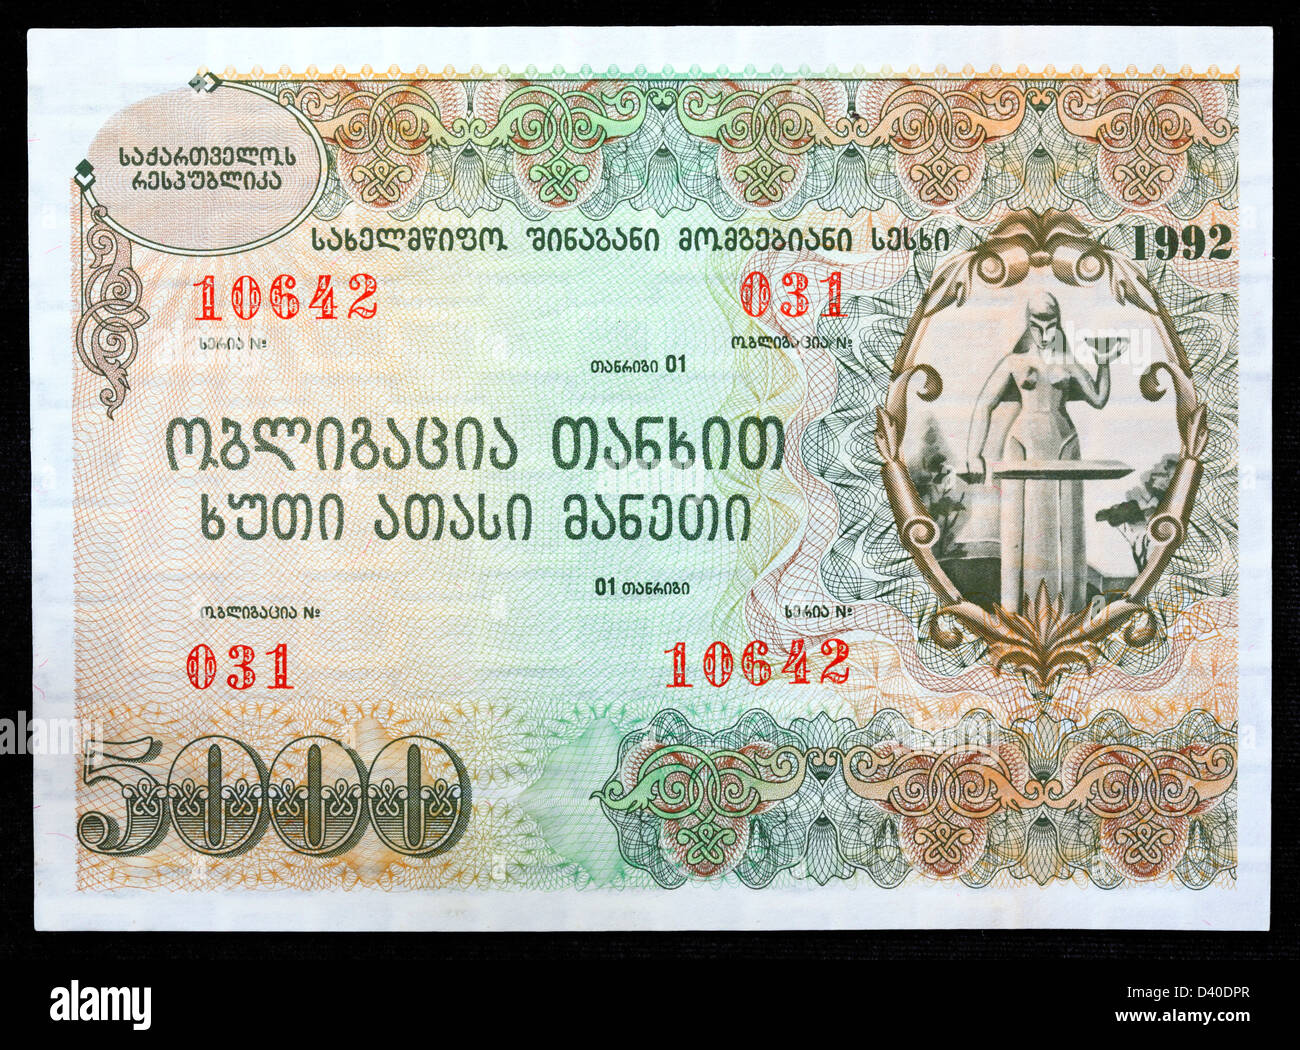 5000 lari public bond banknote, Georgia, 1992 Stock Photo